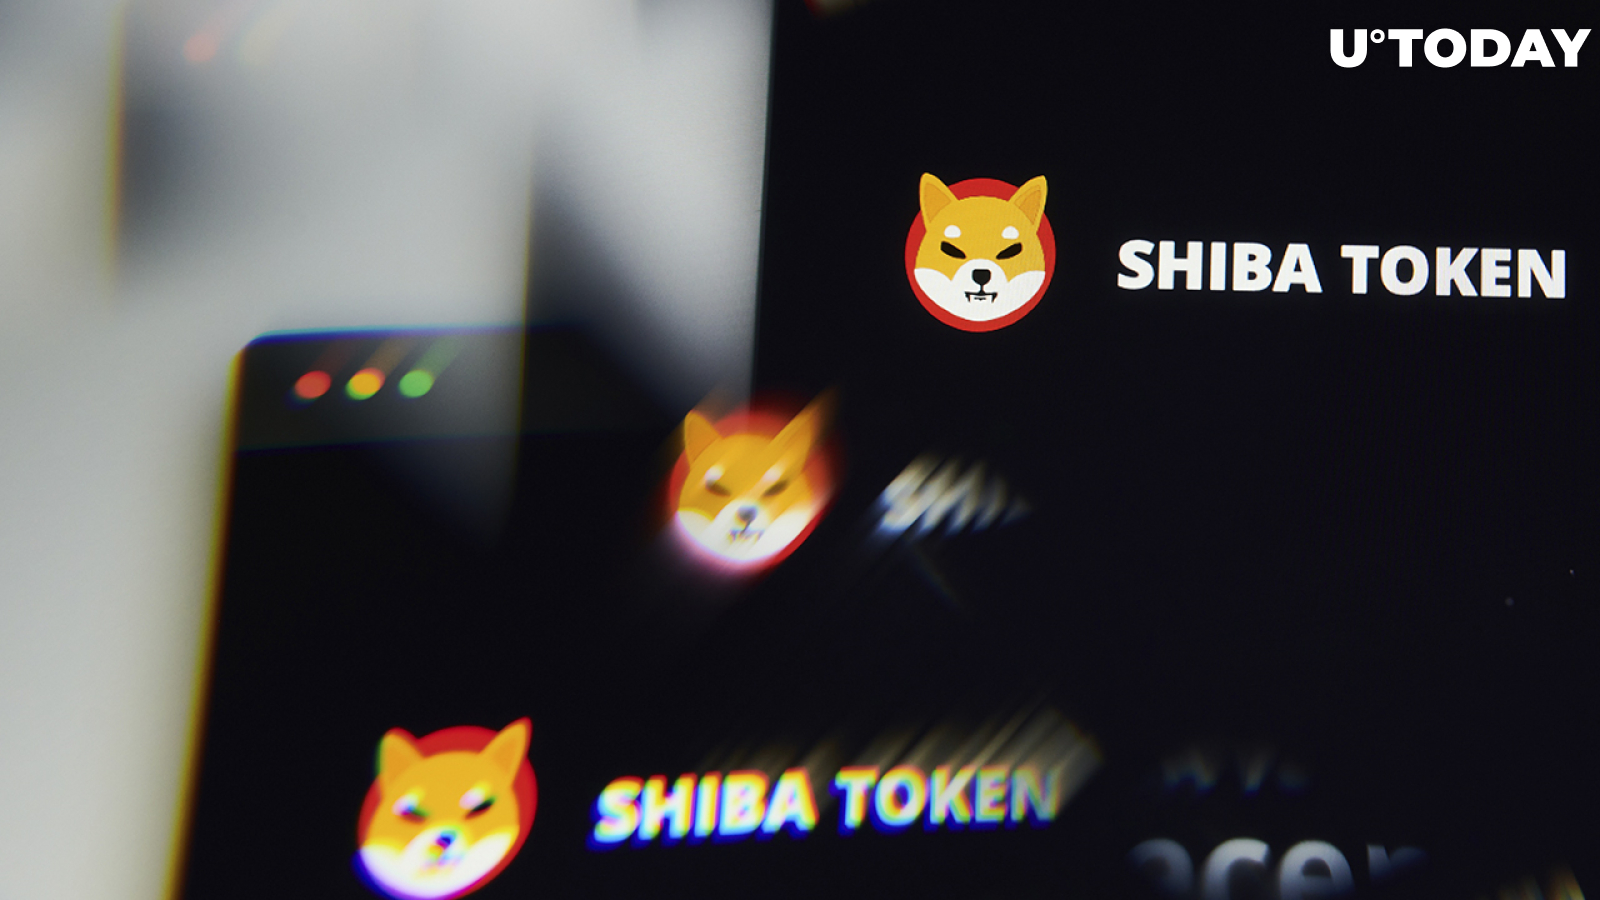 Shiba Inu Army Destroys 1 Billion Meme Tokens Over Last 48 Hours: Report